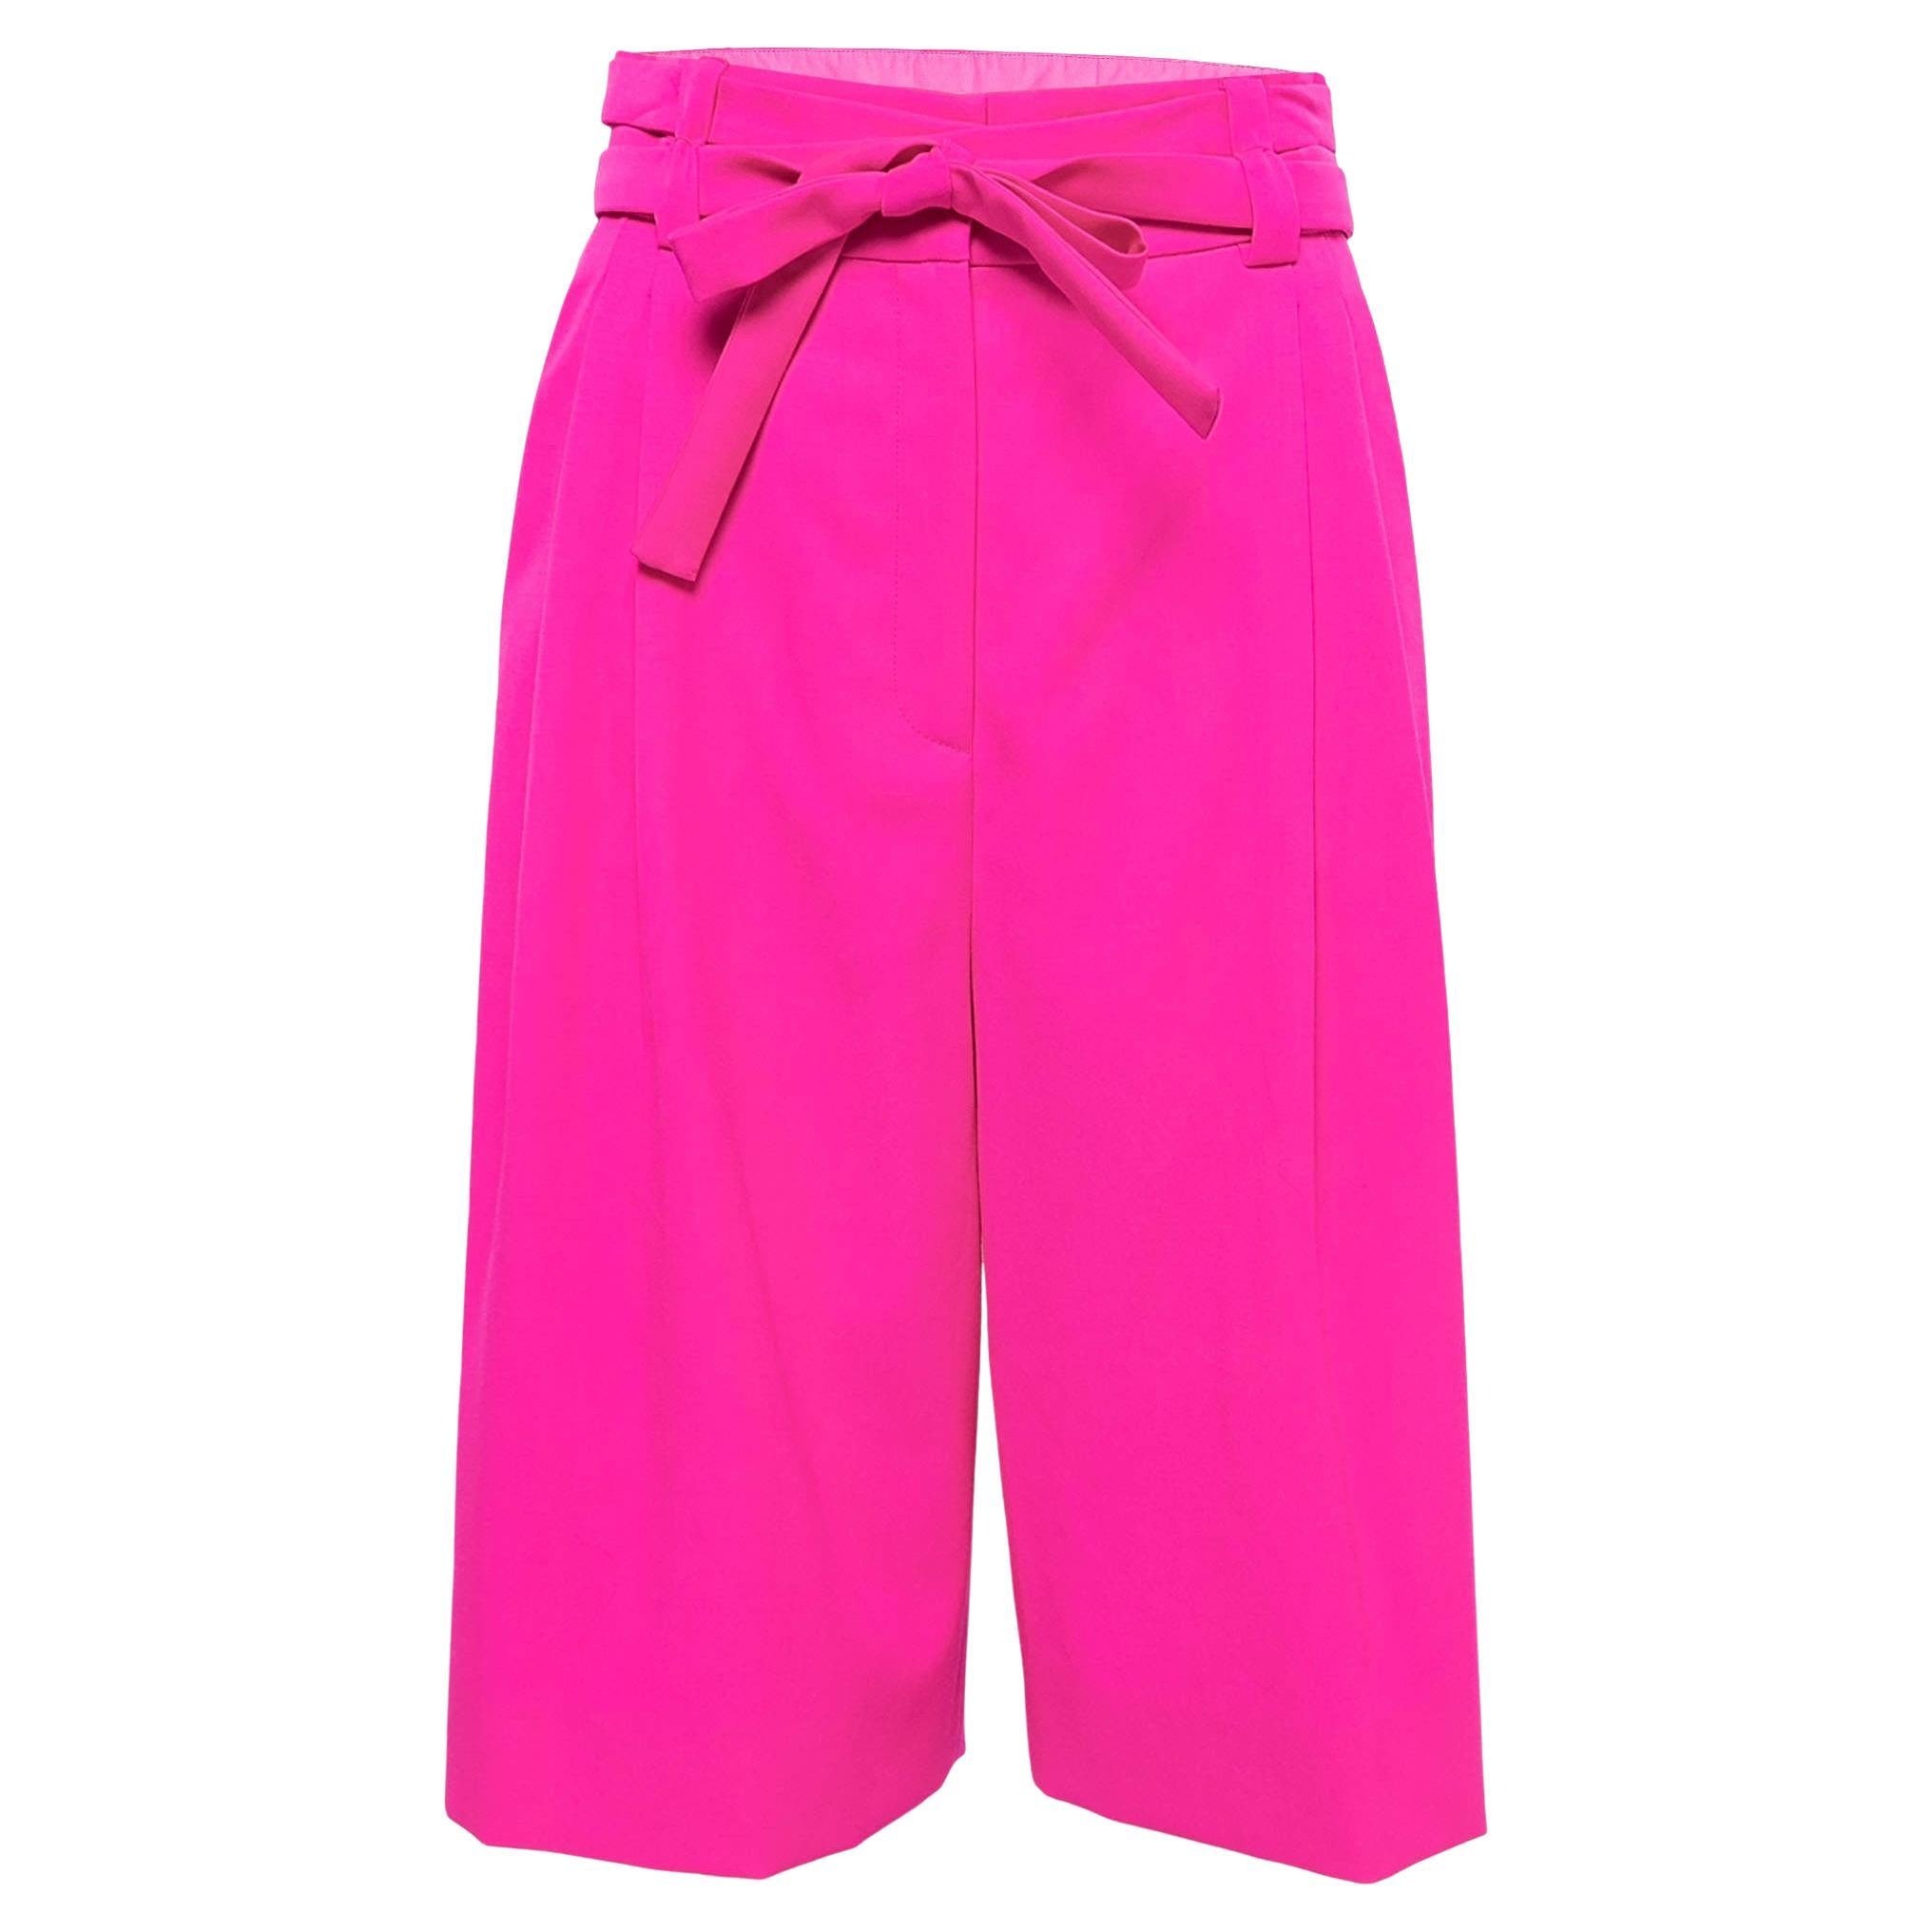 Valentino Neon-Rosa Wolle plissierte knielange Shorts S